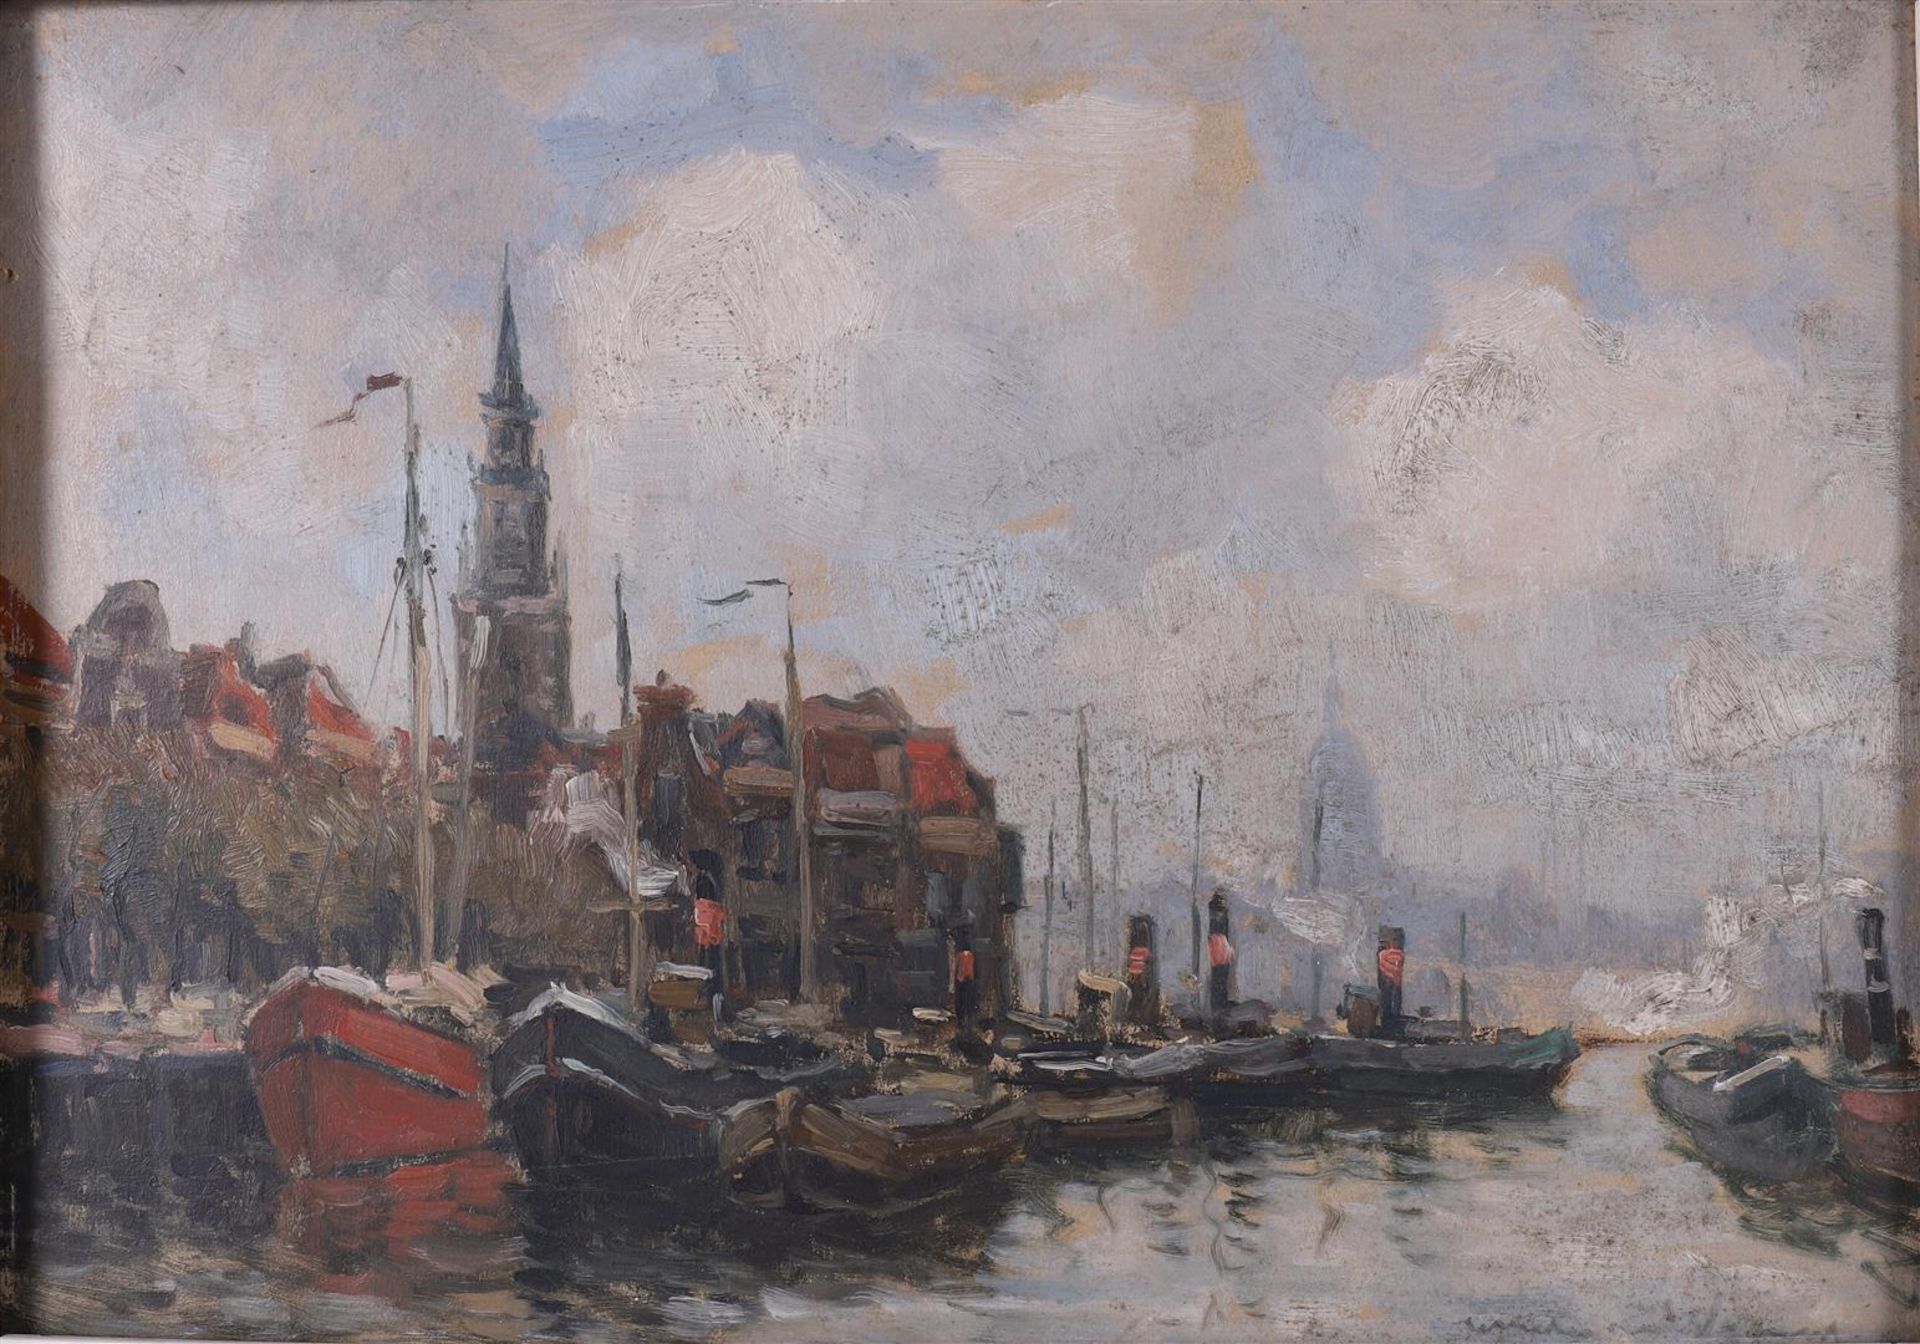 Waning van, Gijsbertus MWF (Martin) (The Hague 1889-1972) "Steamships in the harbor of Amsterdam", - Image 2 of 3